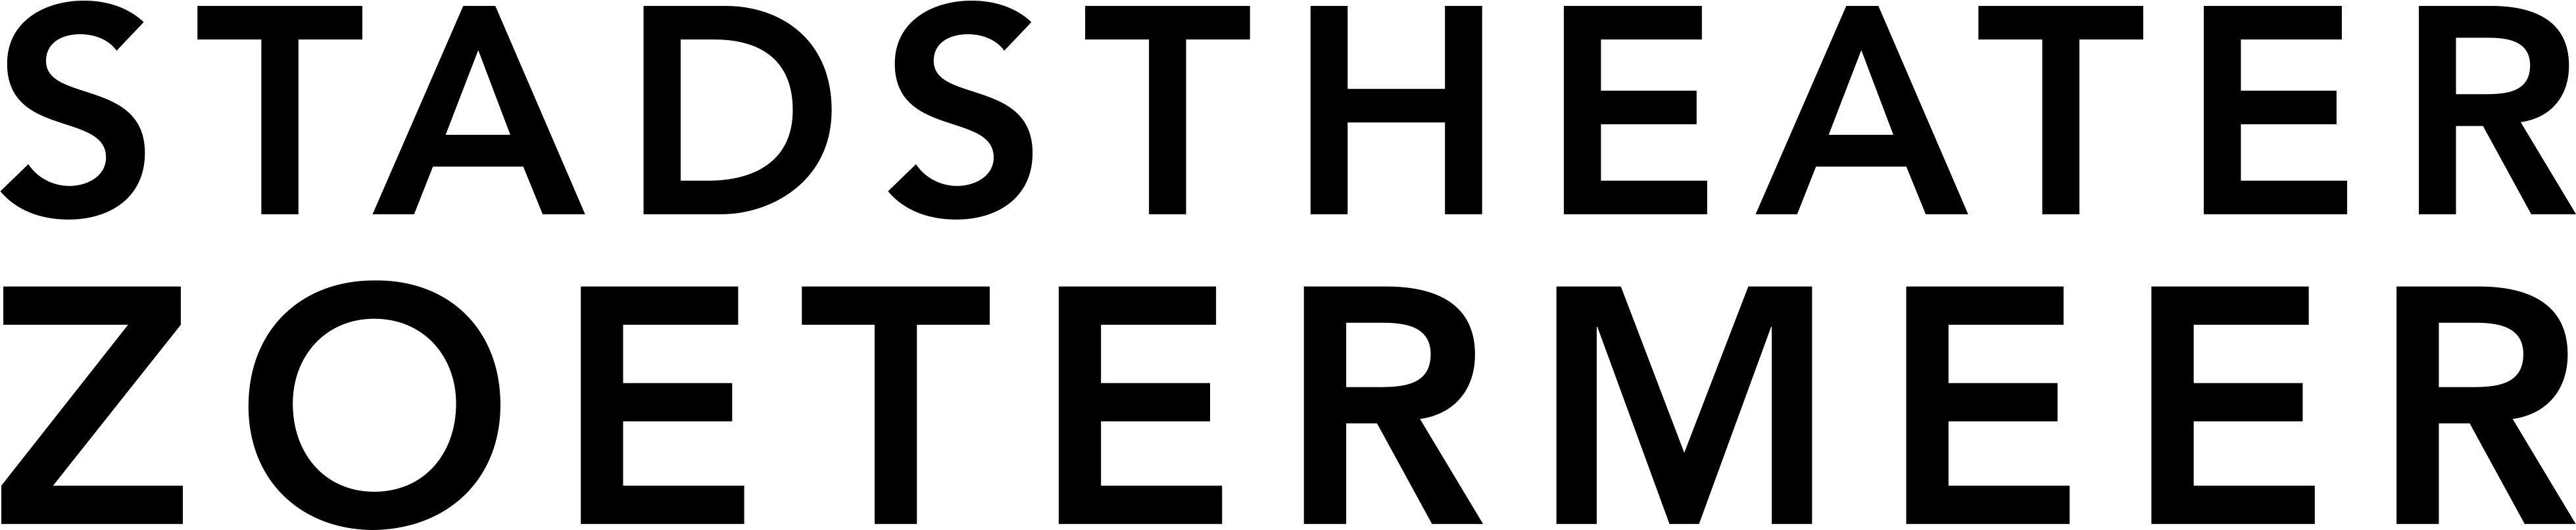 logo-stadstheater-zwart